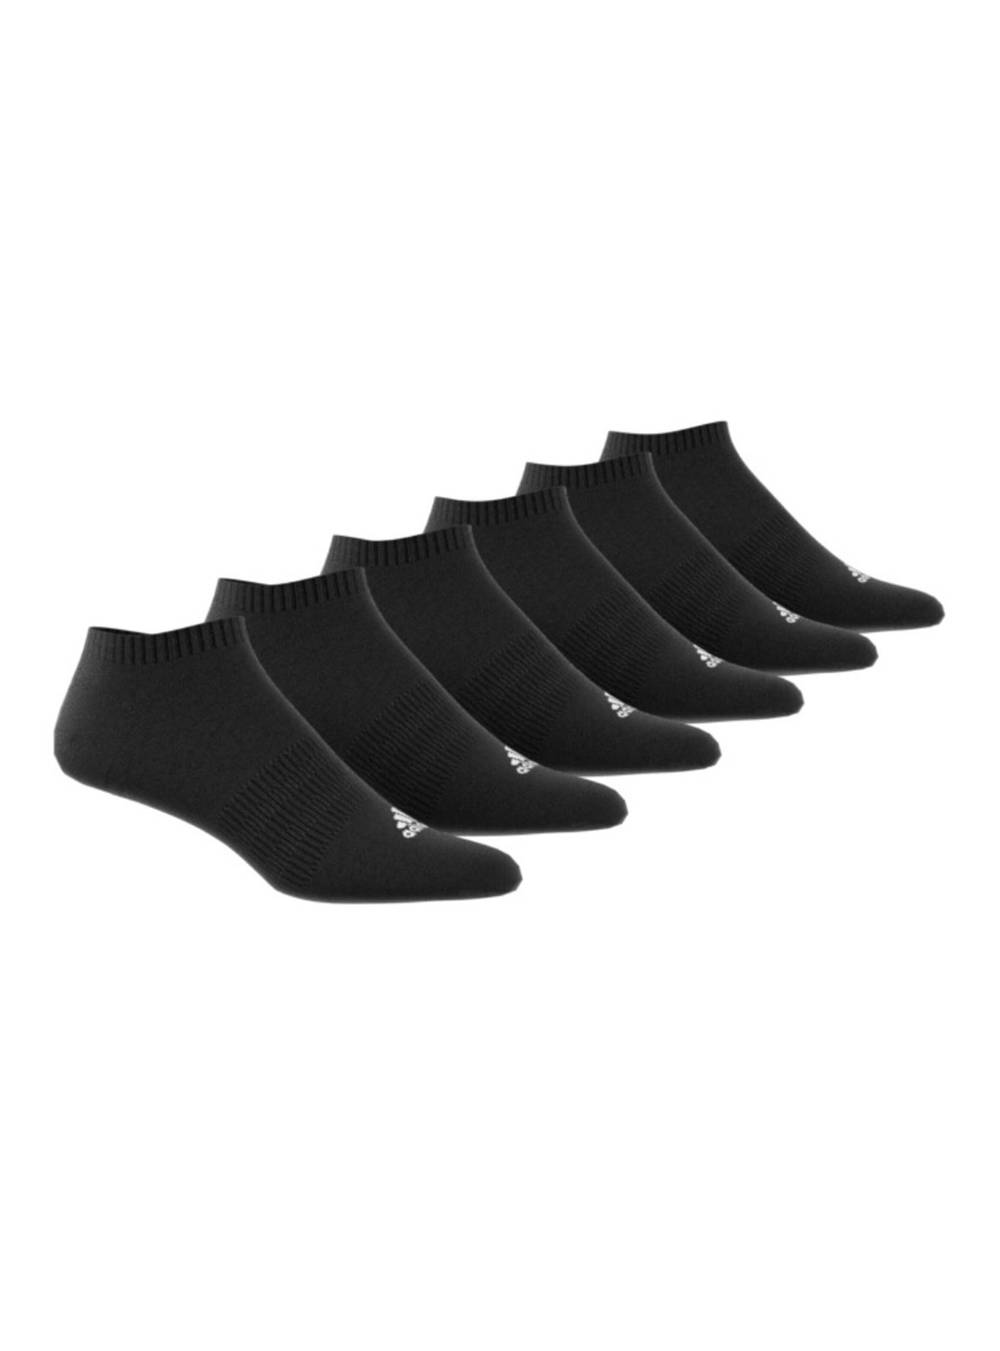 Adidas calcetín urbano black c spw low 6p unisex negro (talla: l)